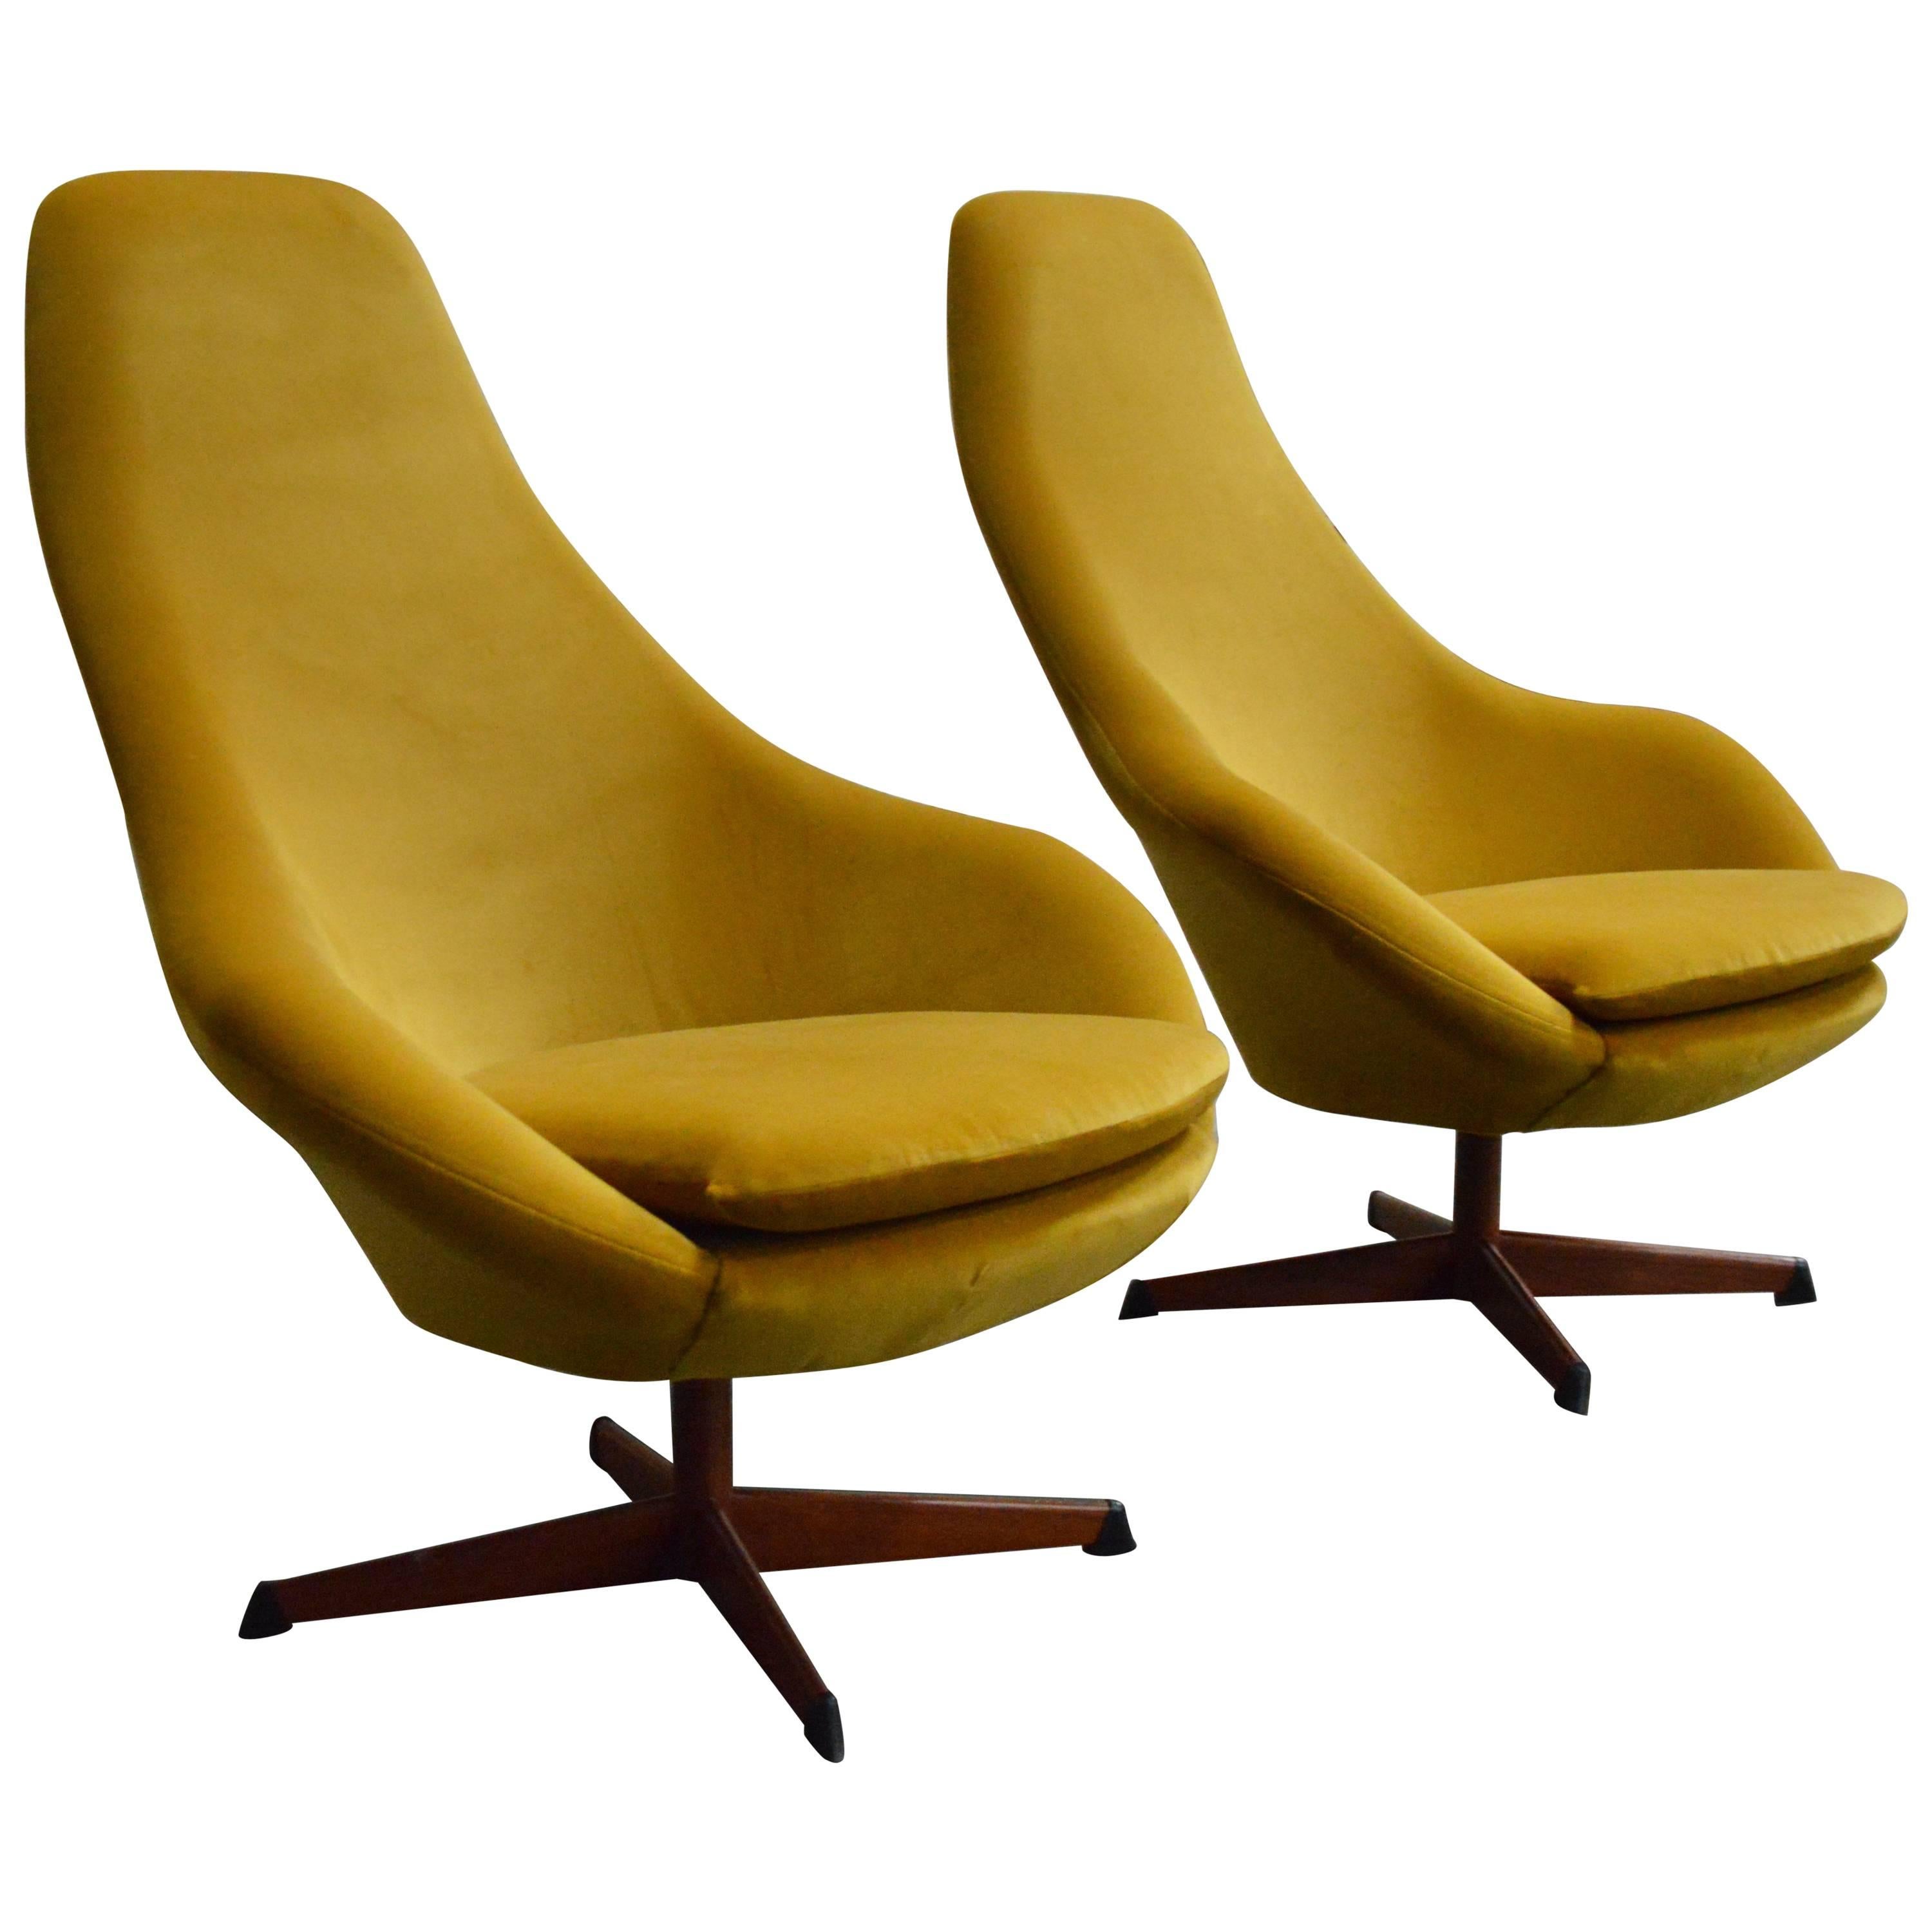 Pair of Midcentury Scandinavian Modern Swivel Chairs in Mustard Velvet